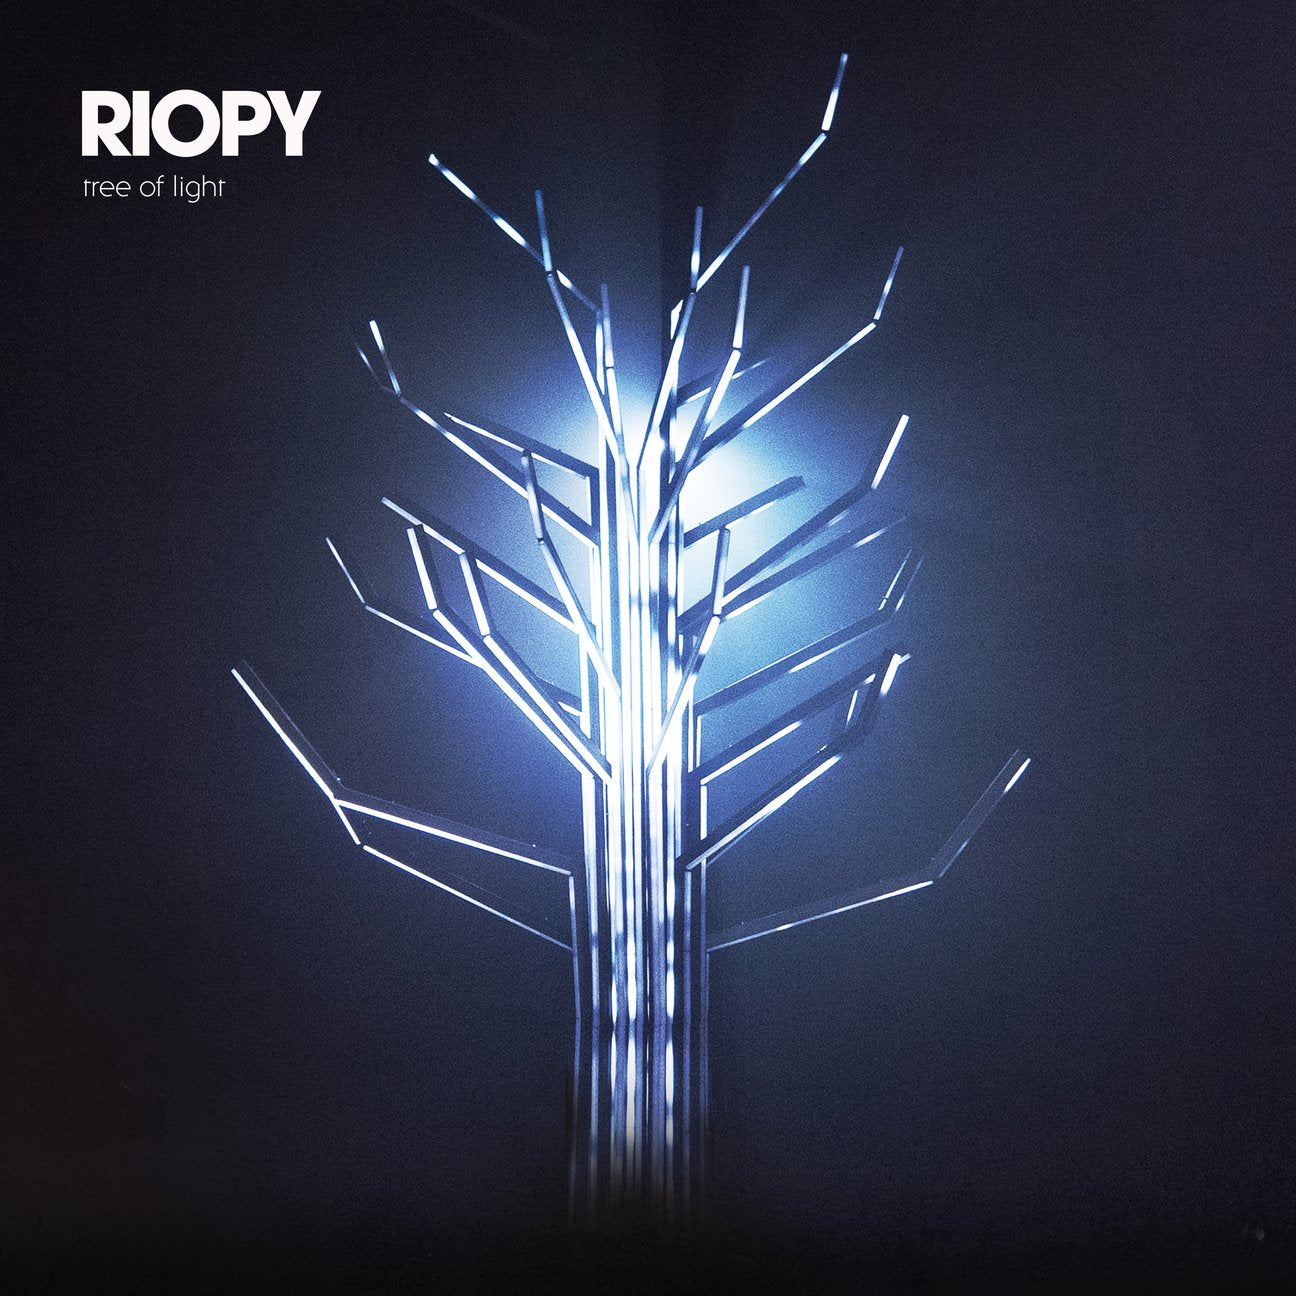 Flo sheet music from RIOPY's Tree of Light album